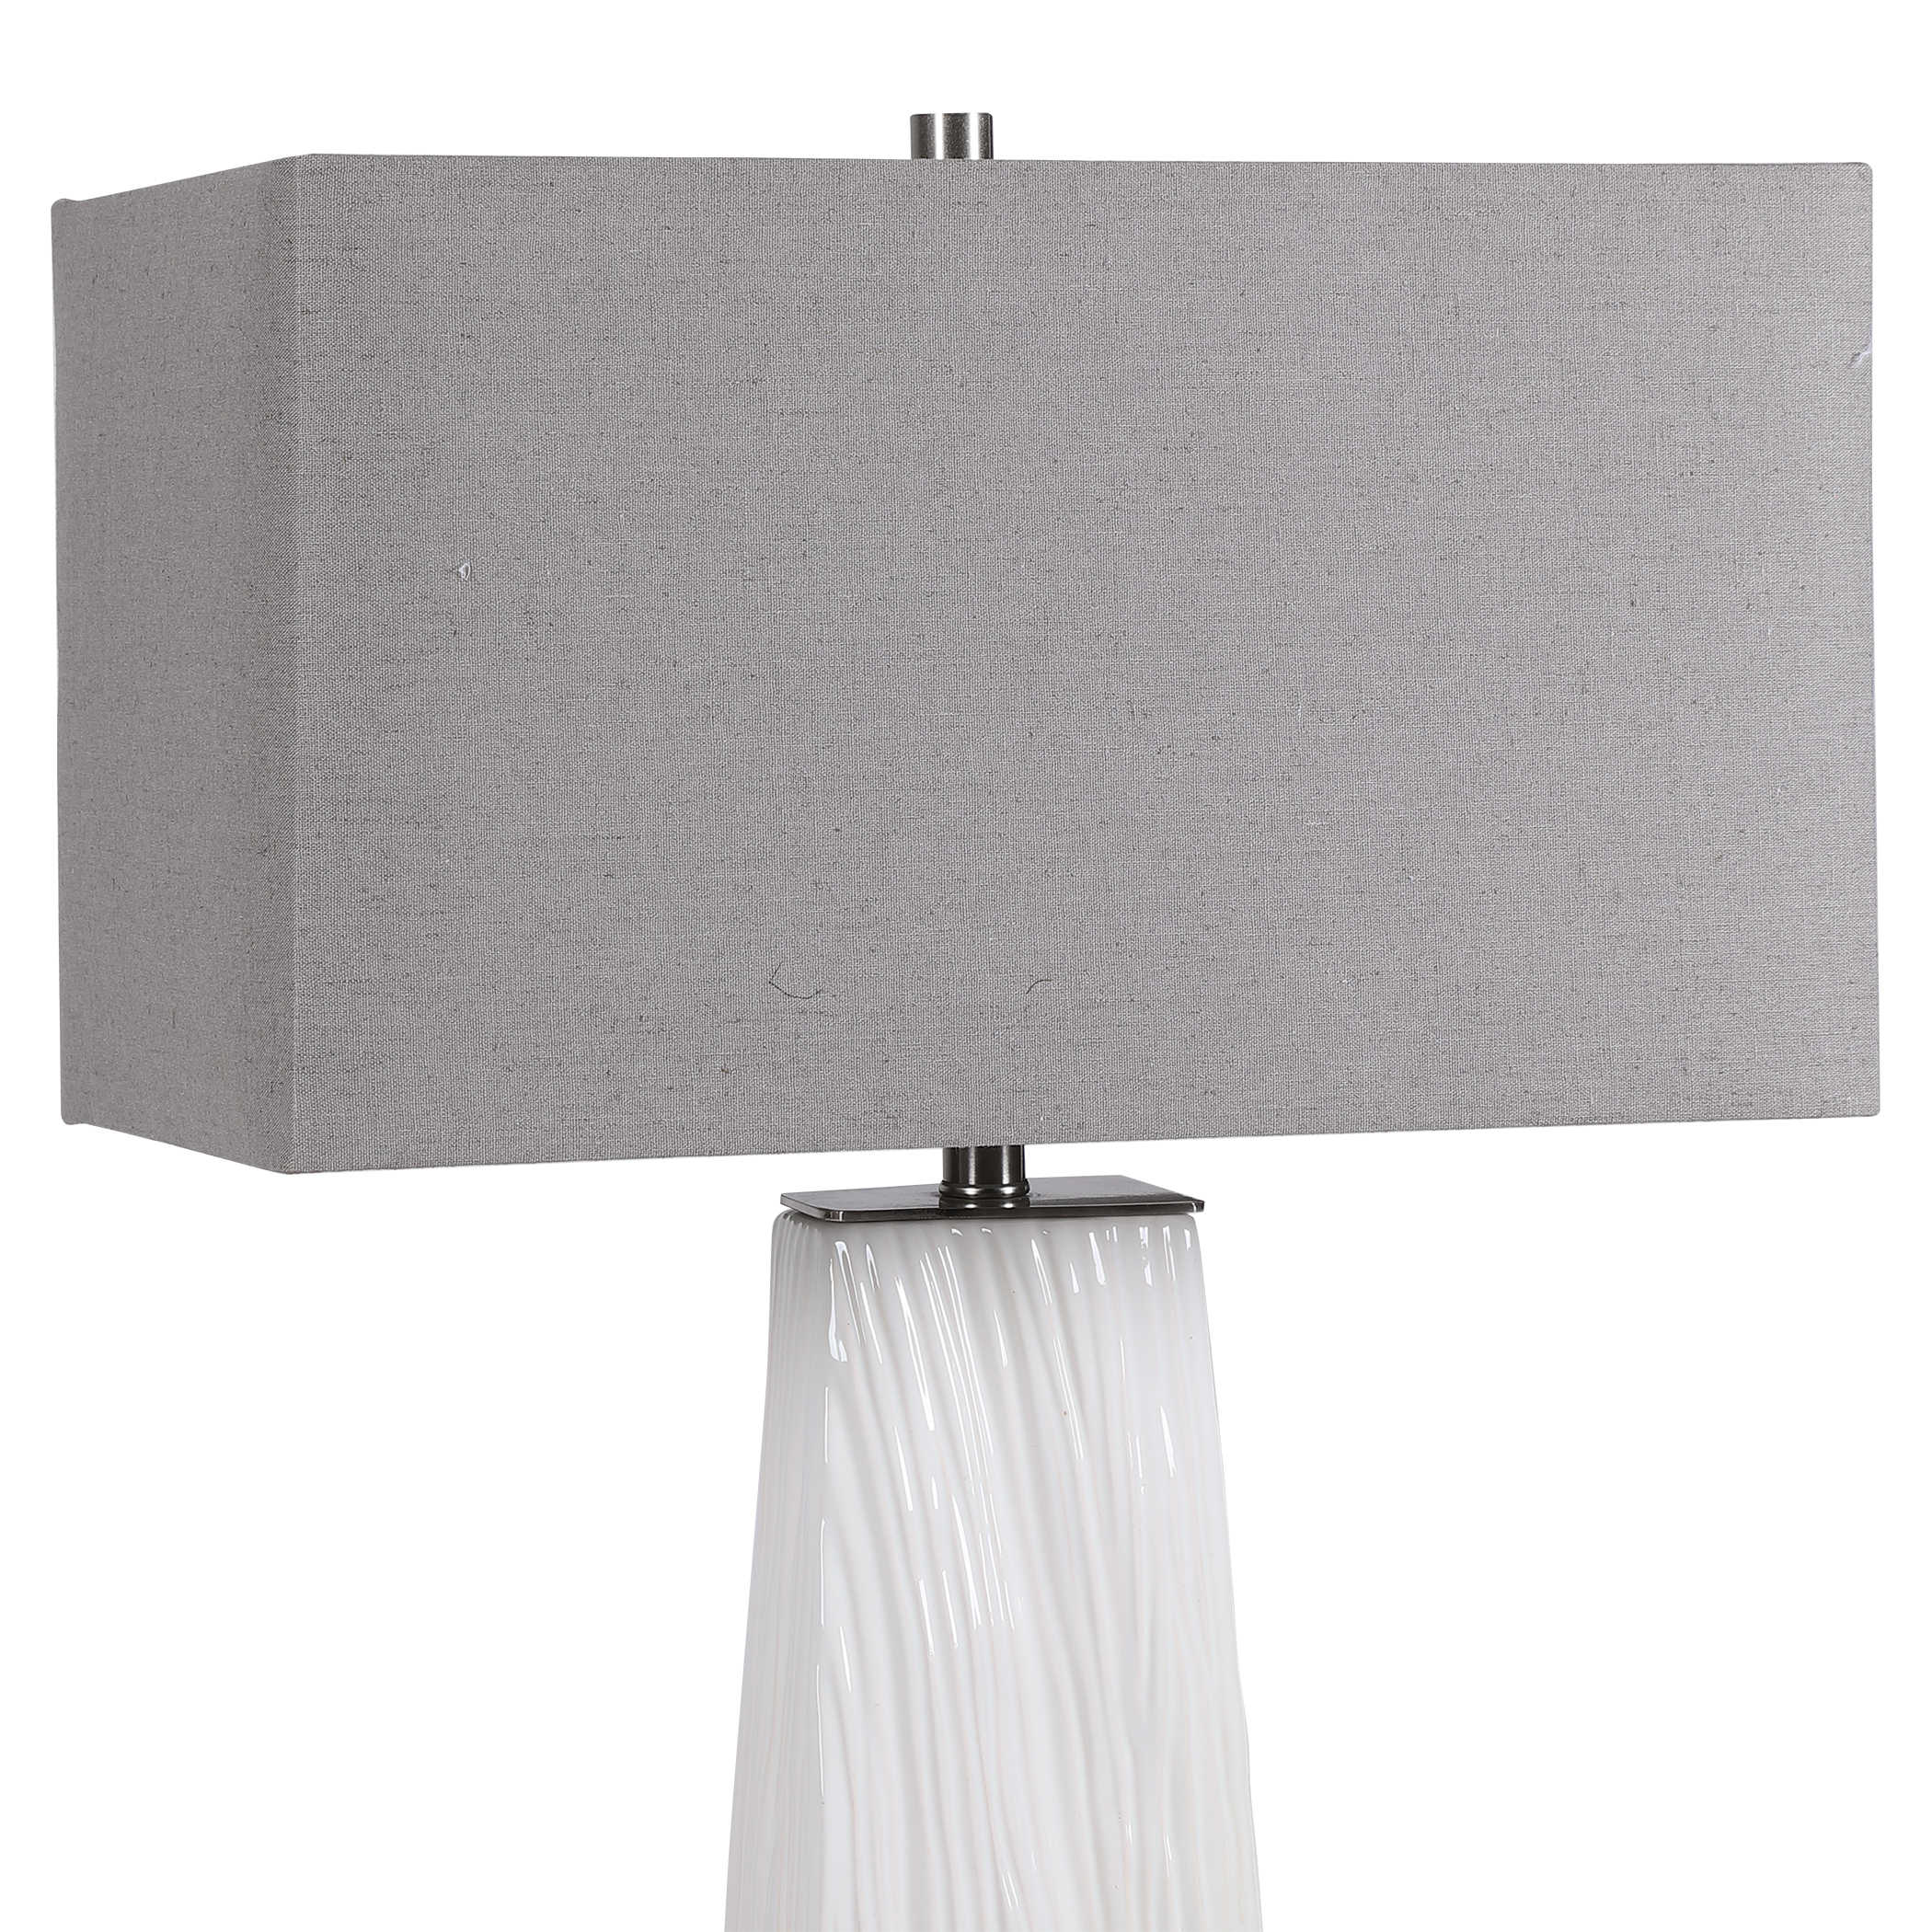 Uttermost Lighting Uttermost Sycamore Table Lamp - Shipping November